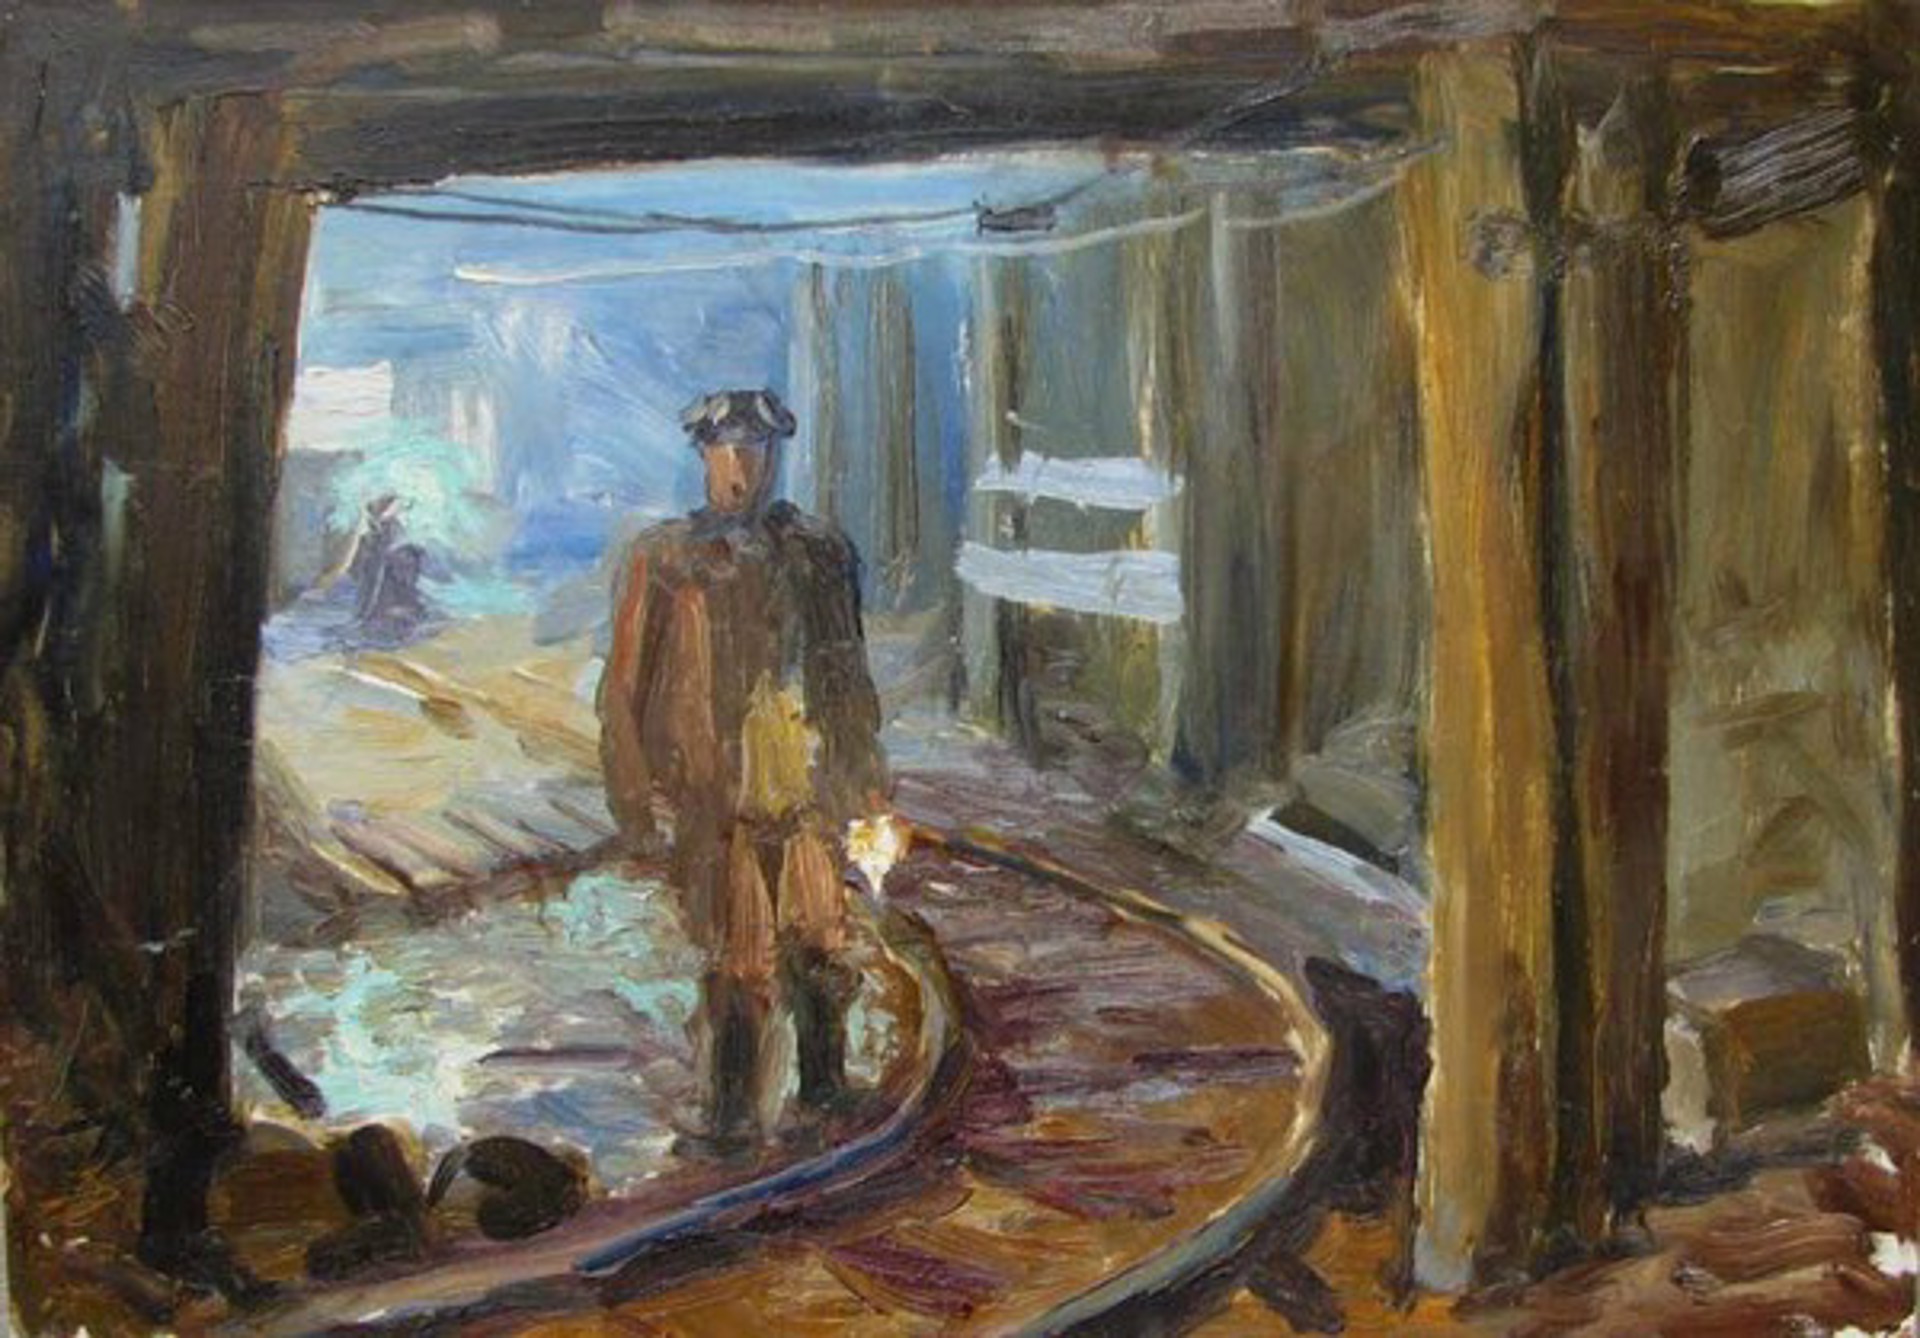 Into The Mine by Konstantin Mikhailov